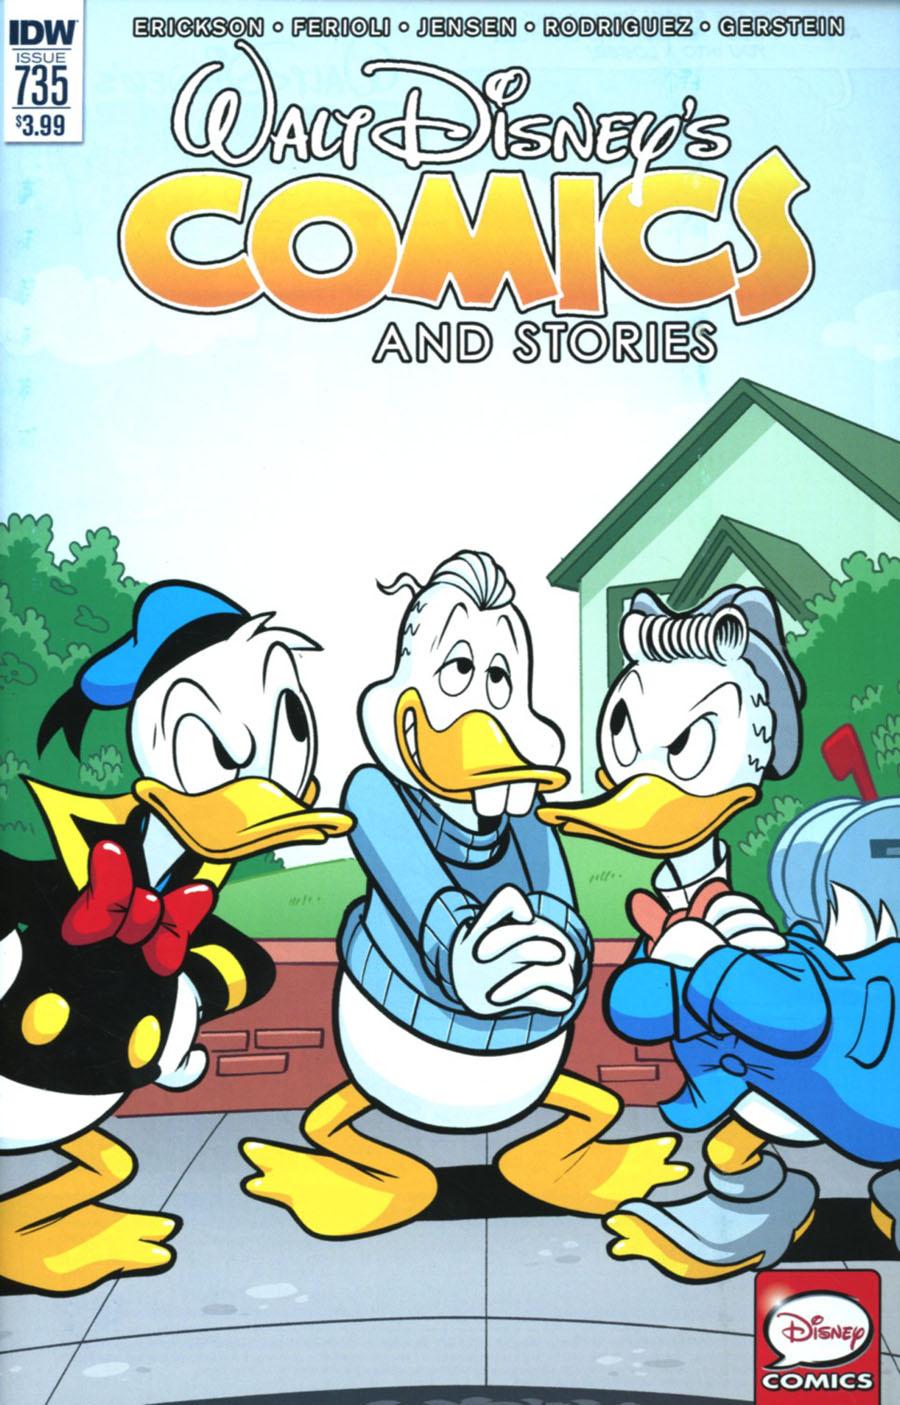 Walt Disneys Comics & Stories Vol. 1 #735